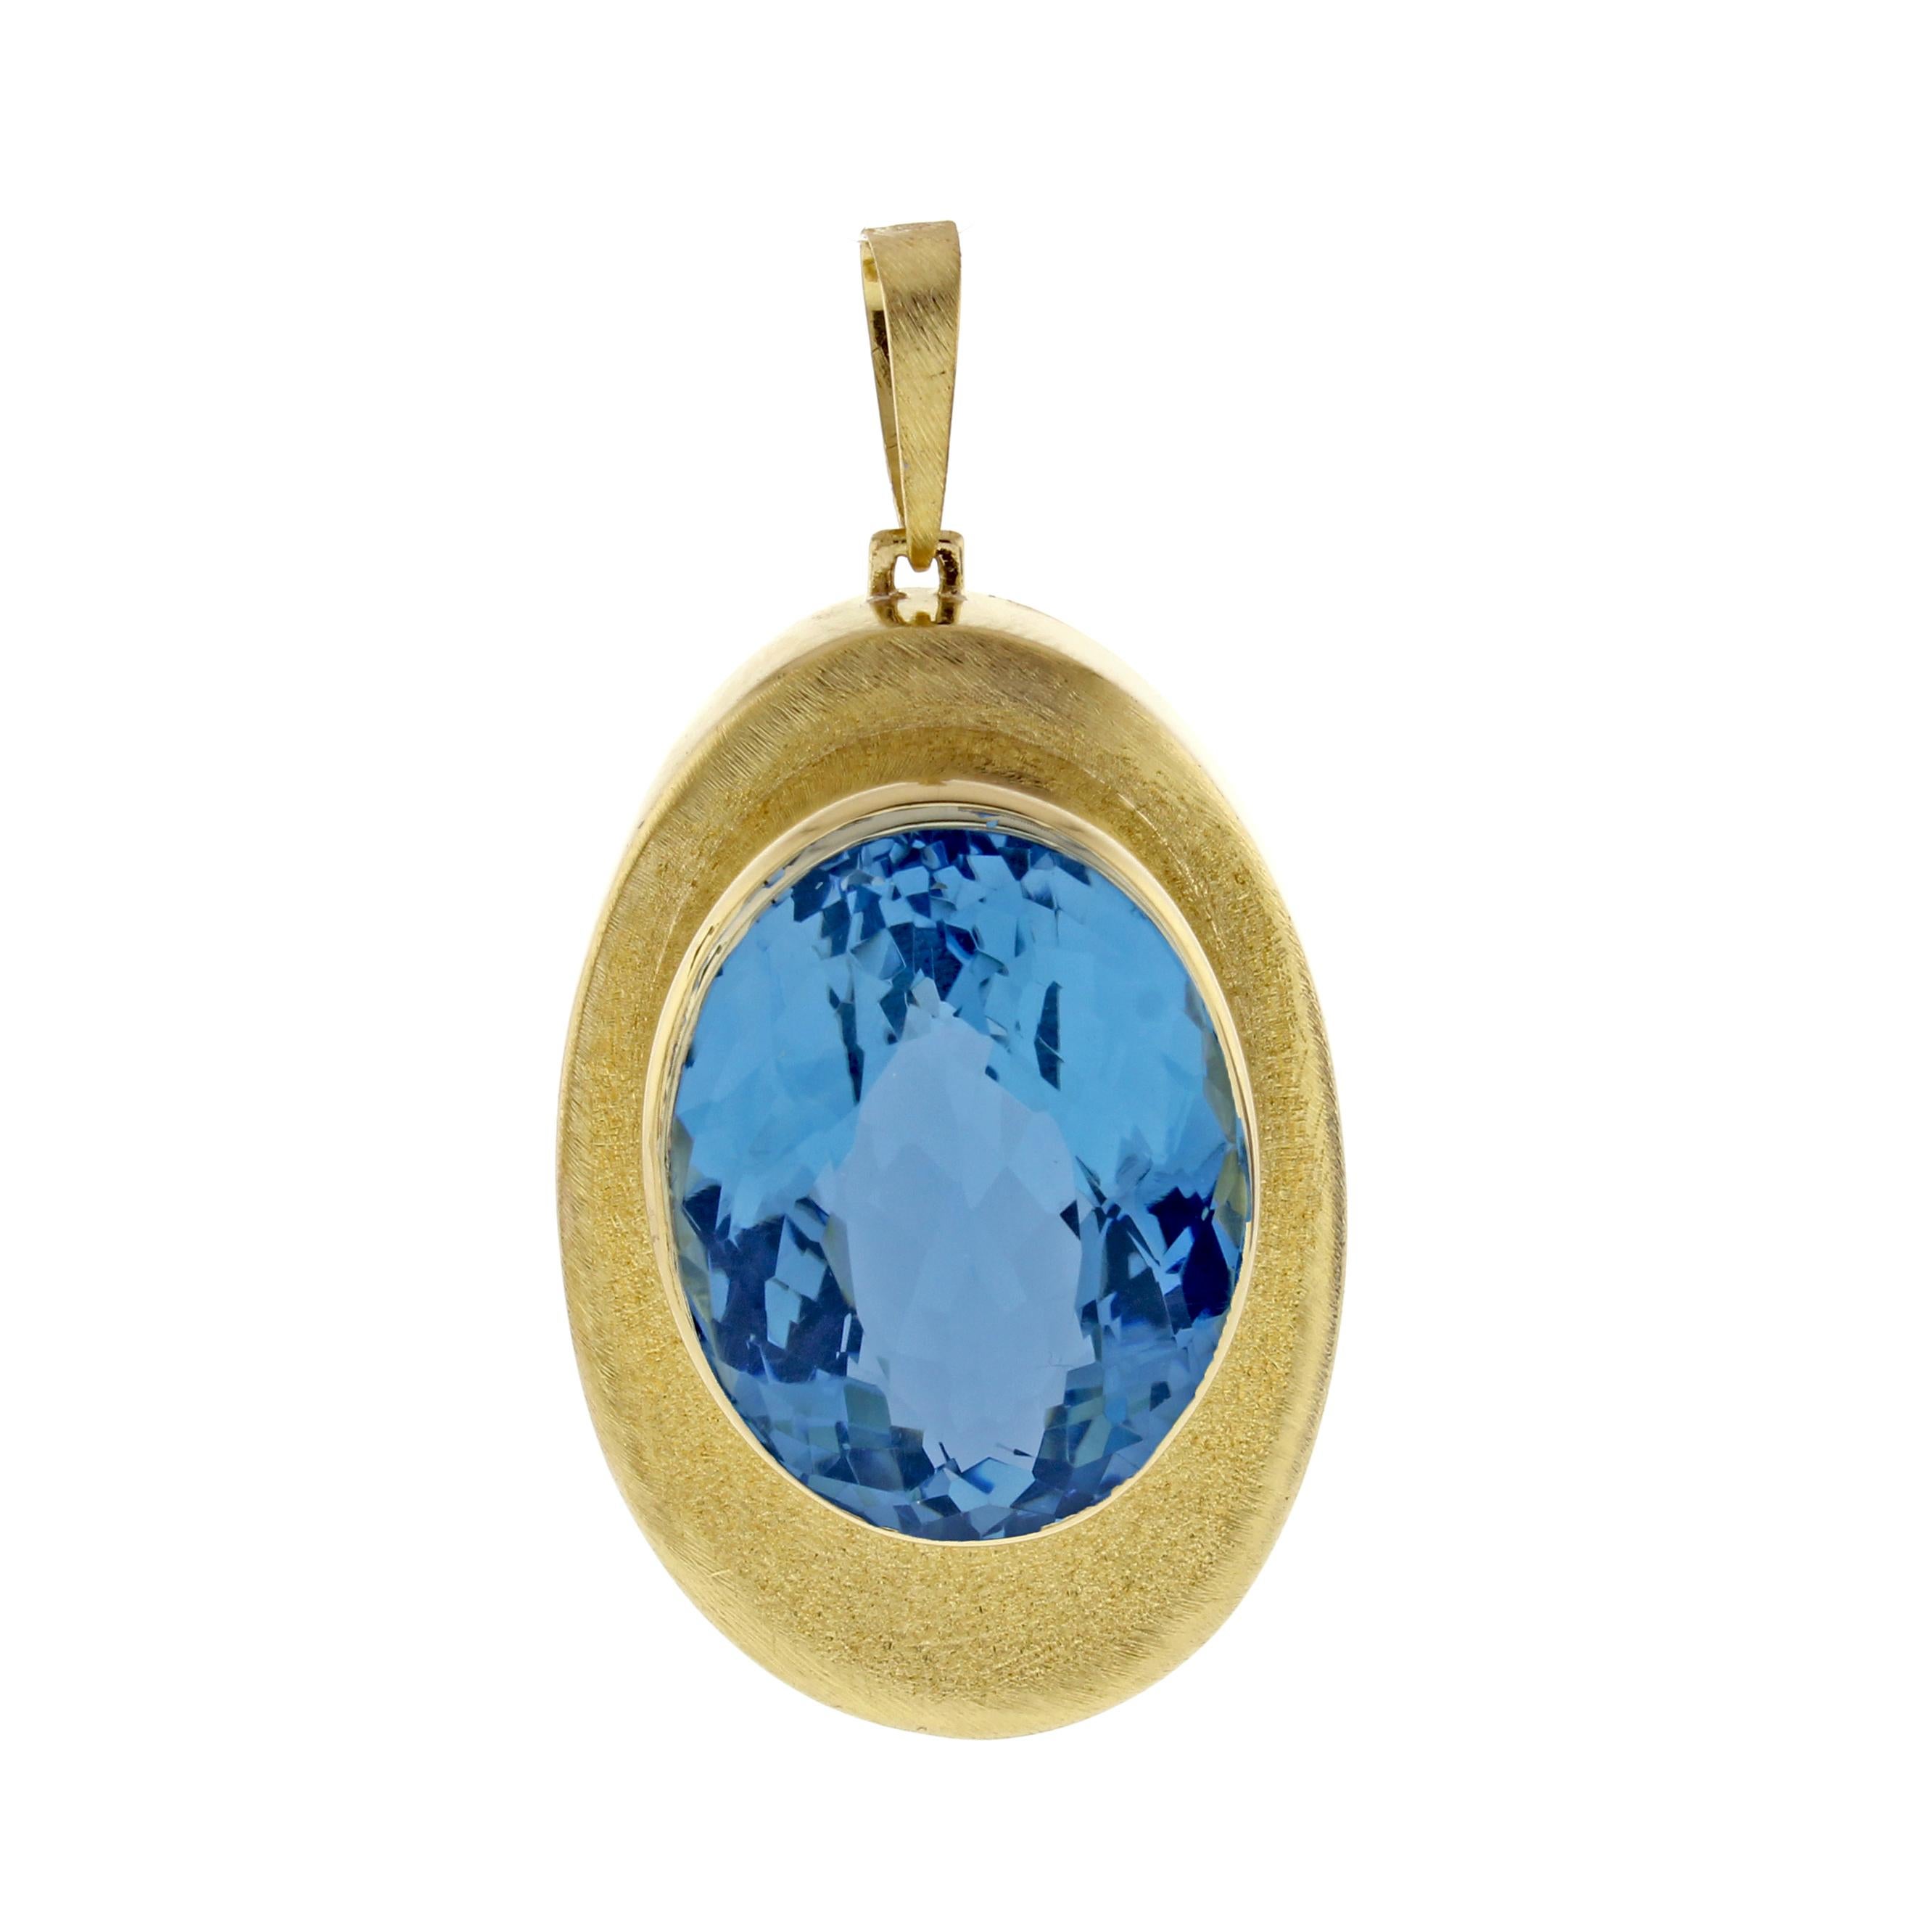 From world renowned Brazilian jeweler Haroldo Burle Marx (1911-1991), a blue topaz and 18 karat gold pendant   The pendant measures 45*35mm with the blue topaz measuring 21*28mm